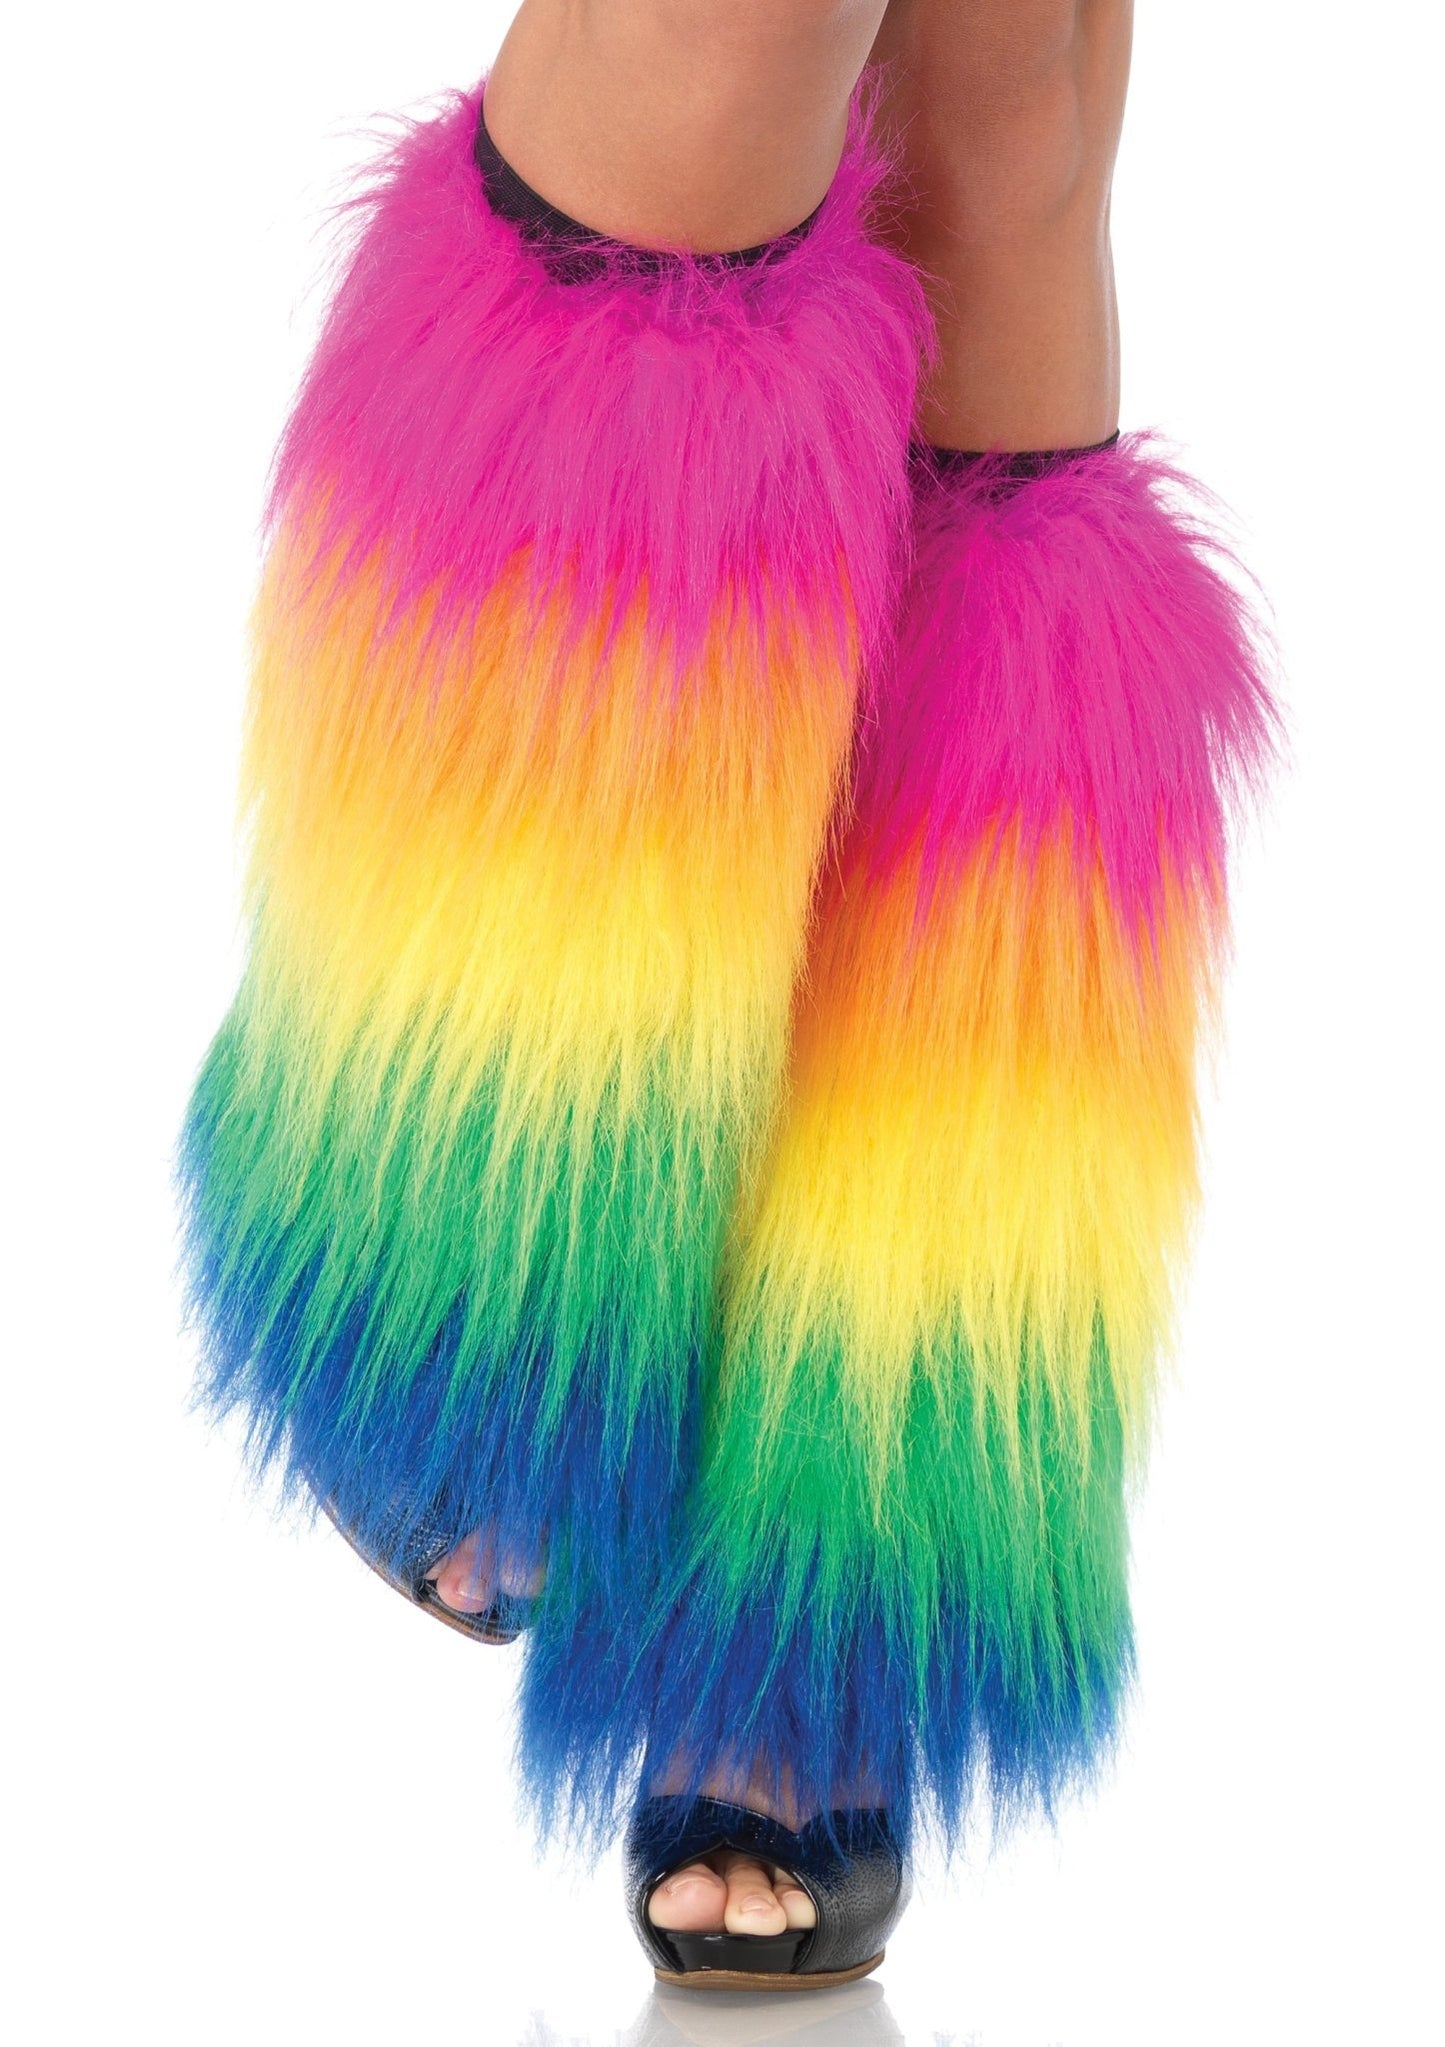 Furry Leg Warmers - Rainbow